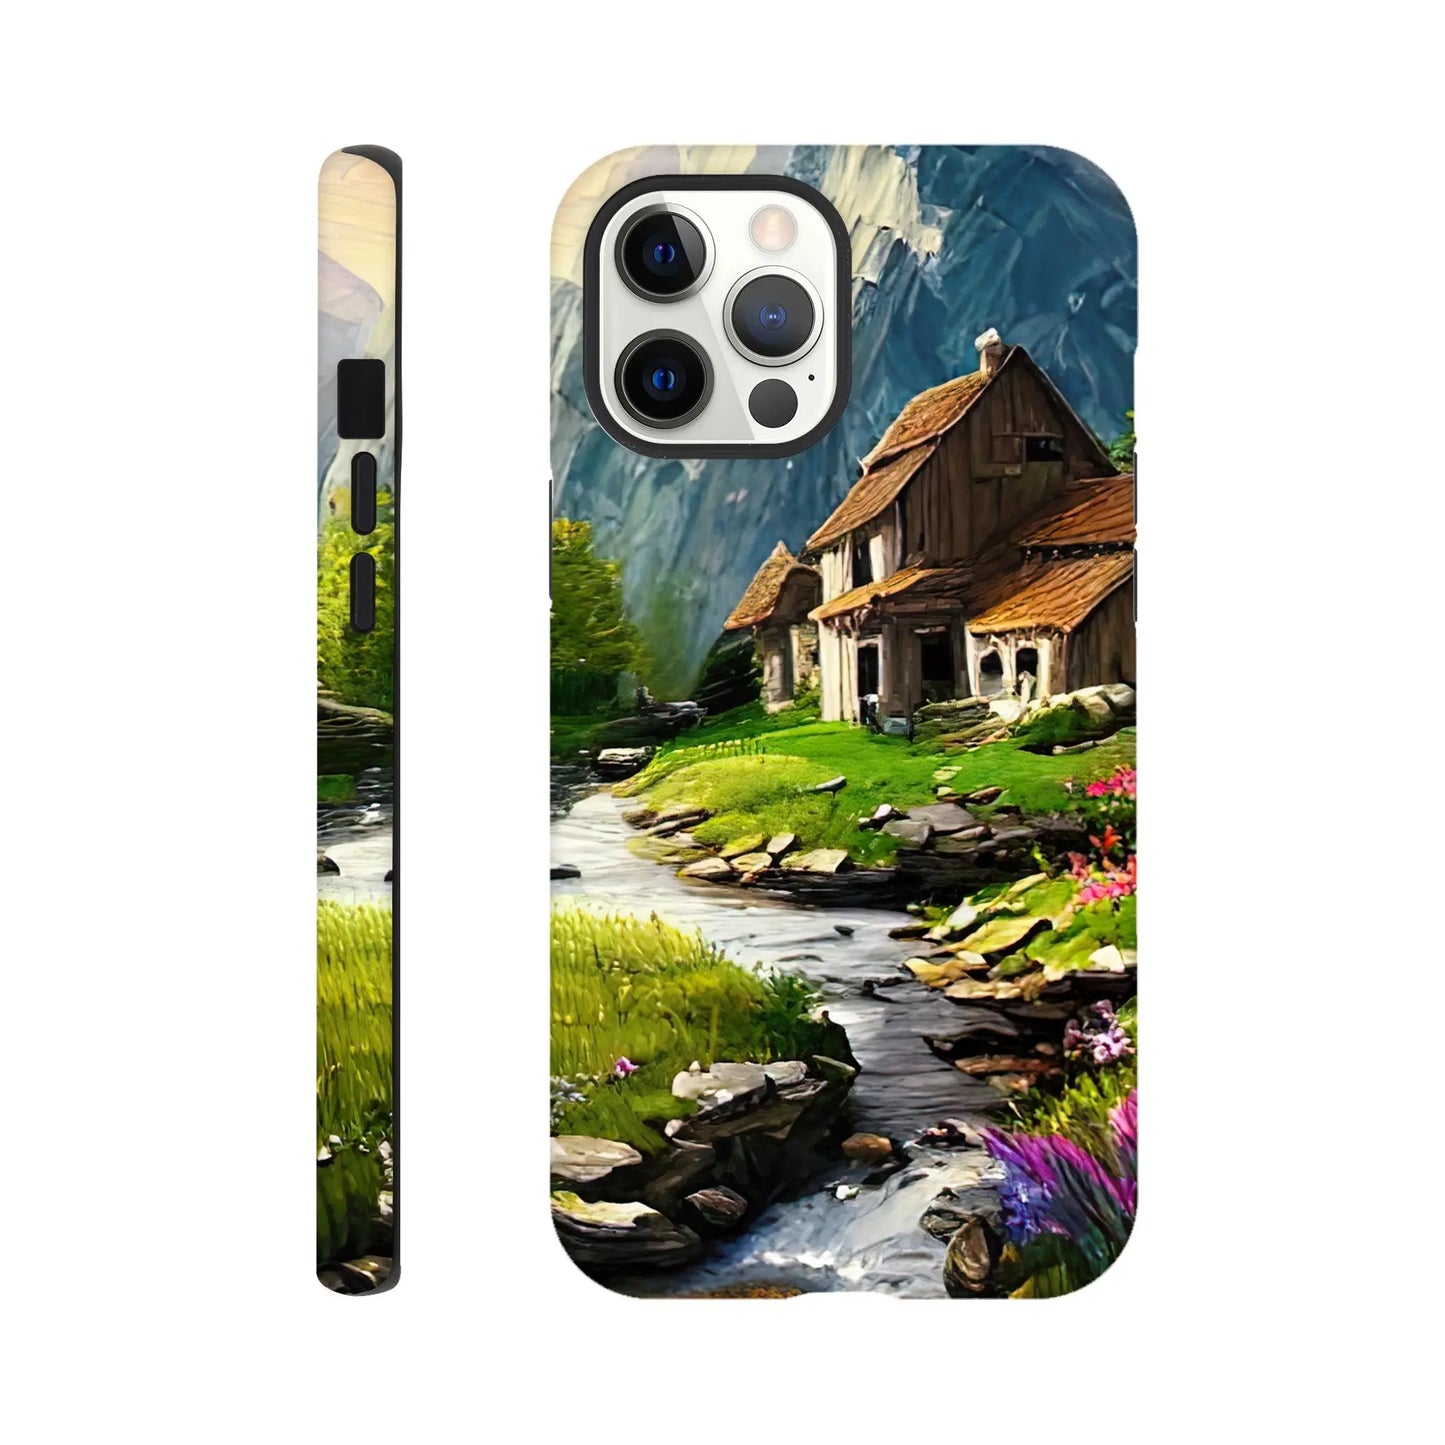 Smartphone-Hülle "Hart" - Berglandschaft - Malerischer Stil, KI-Kunst RolConArt, Landschaften, iPhone-12-Pro-Max